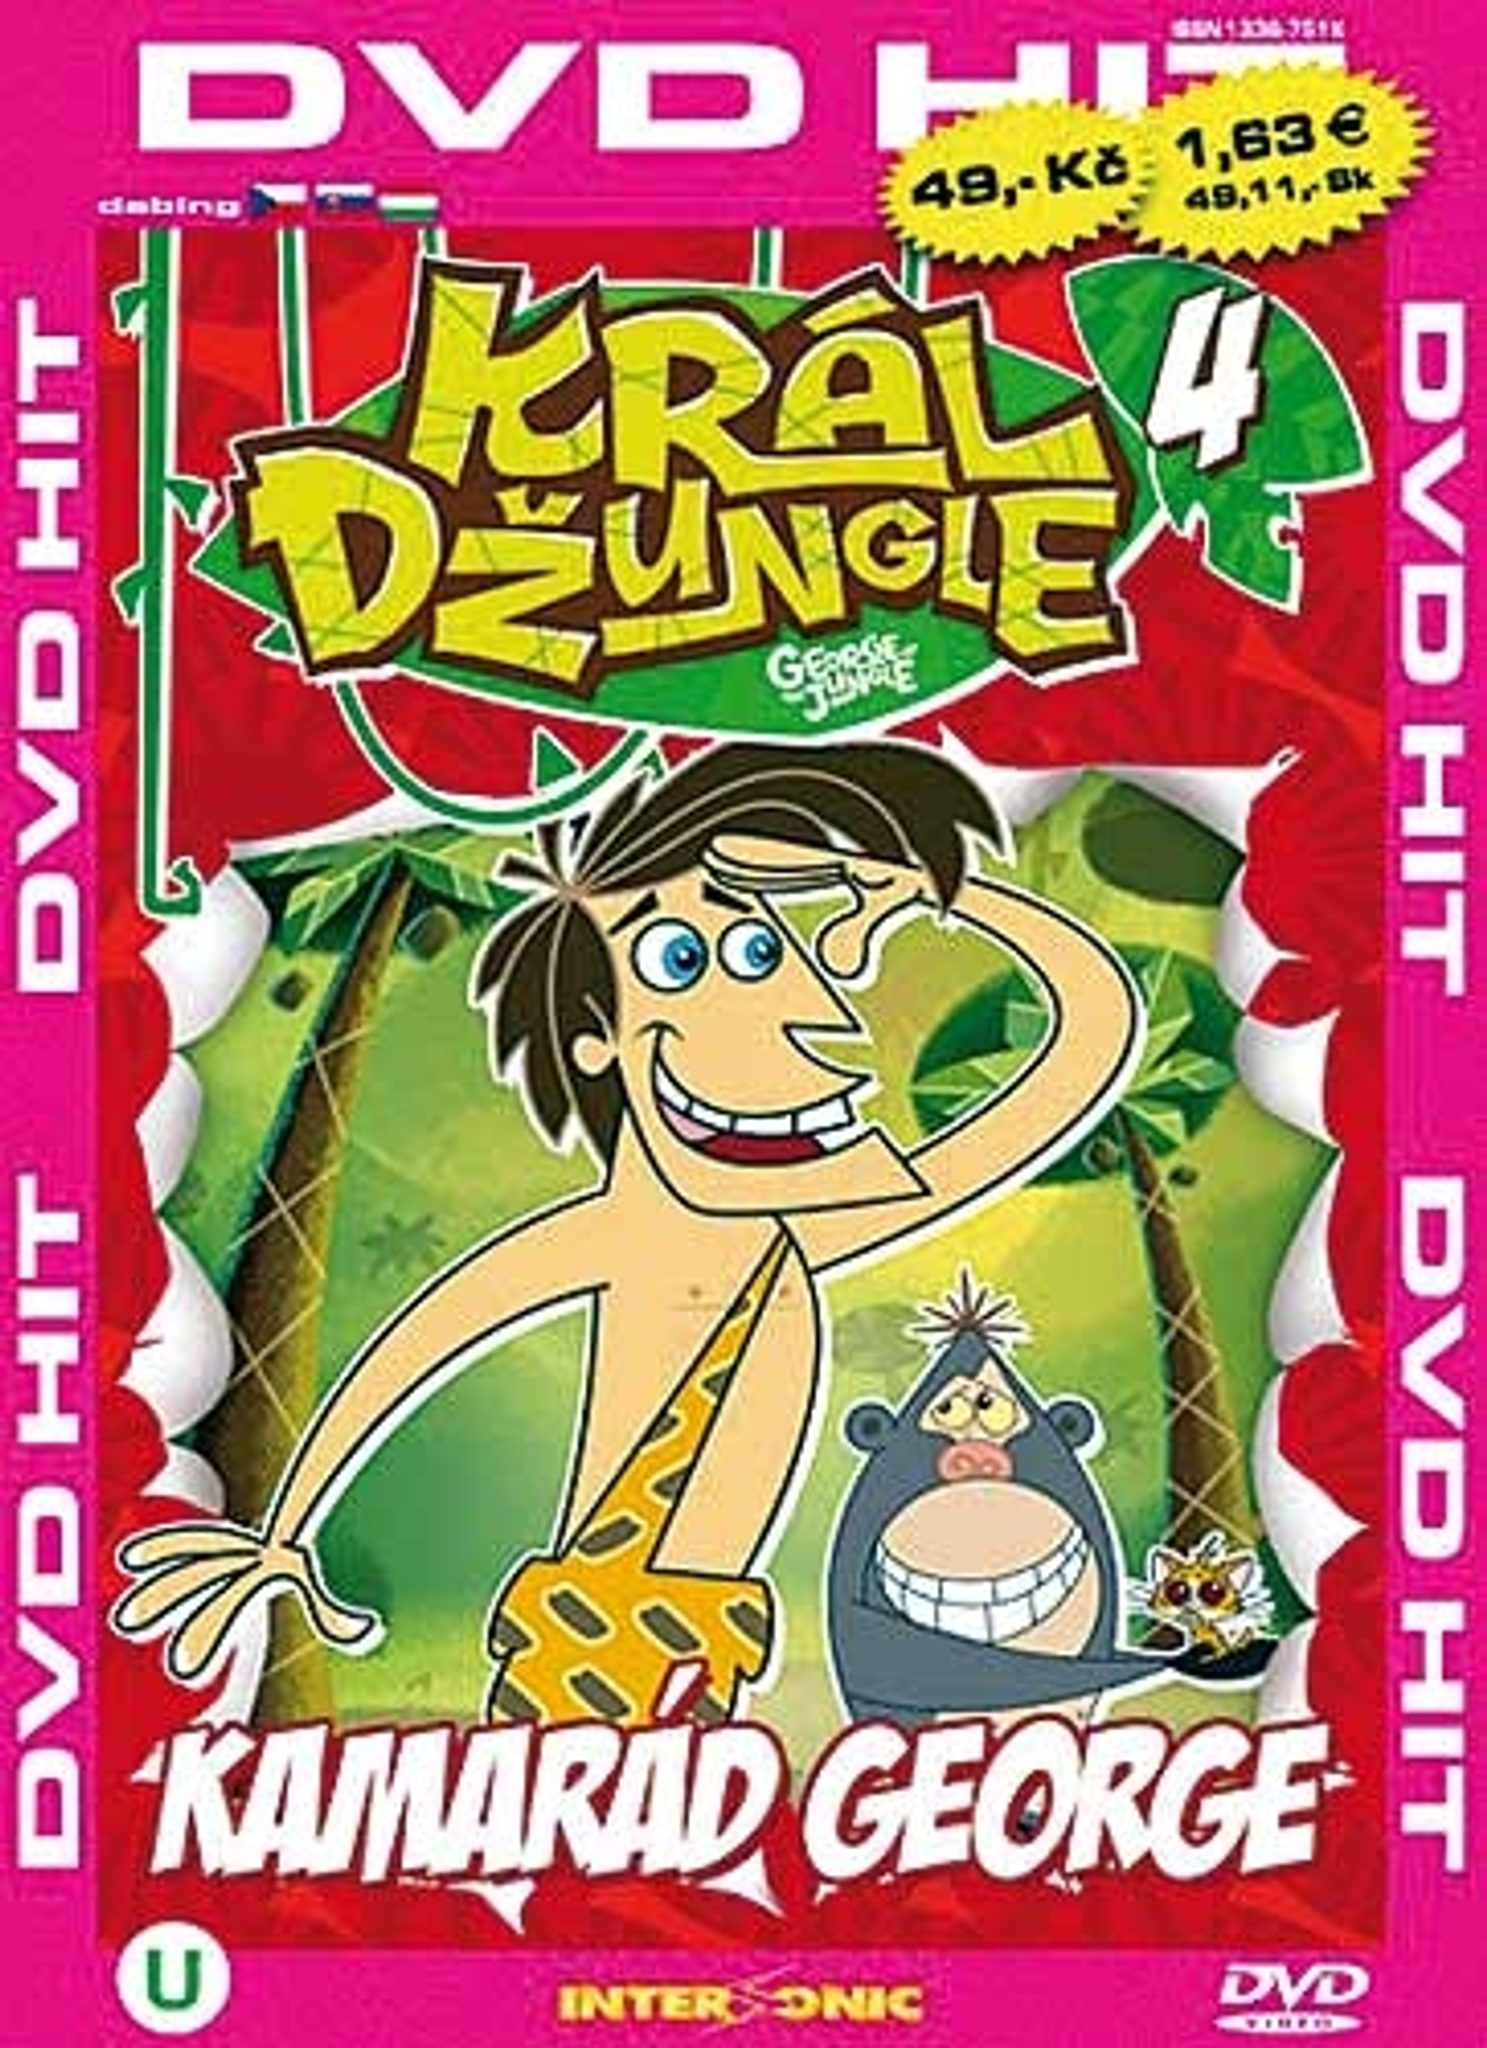 DVD Krl dungle 3